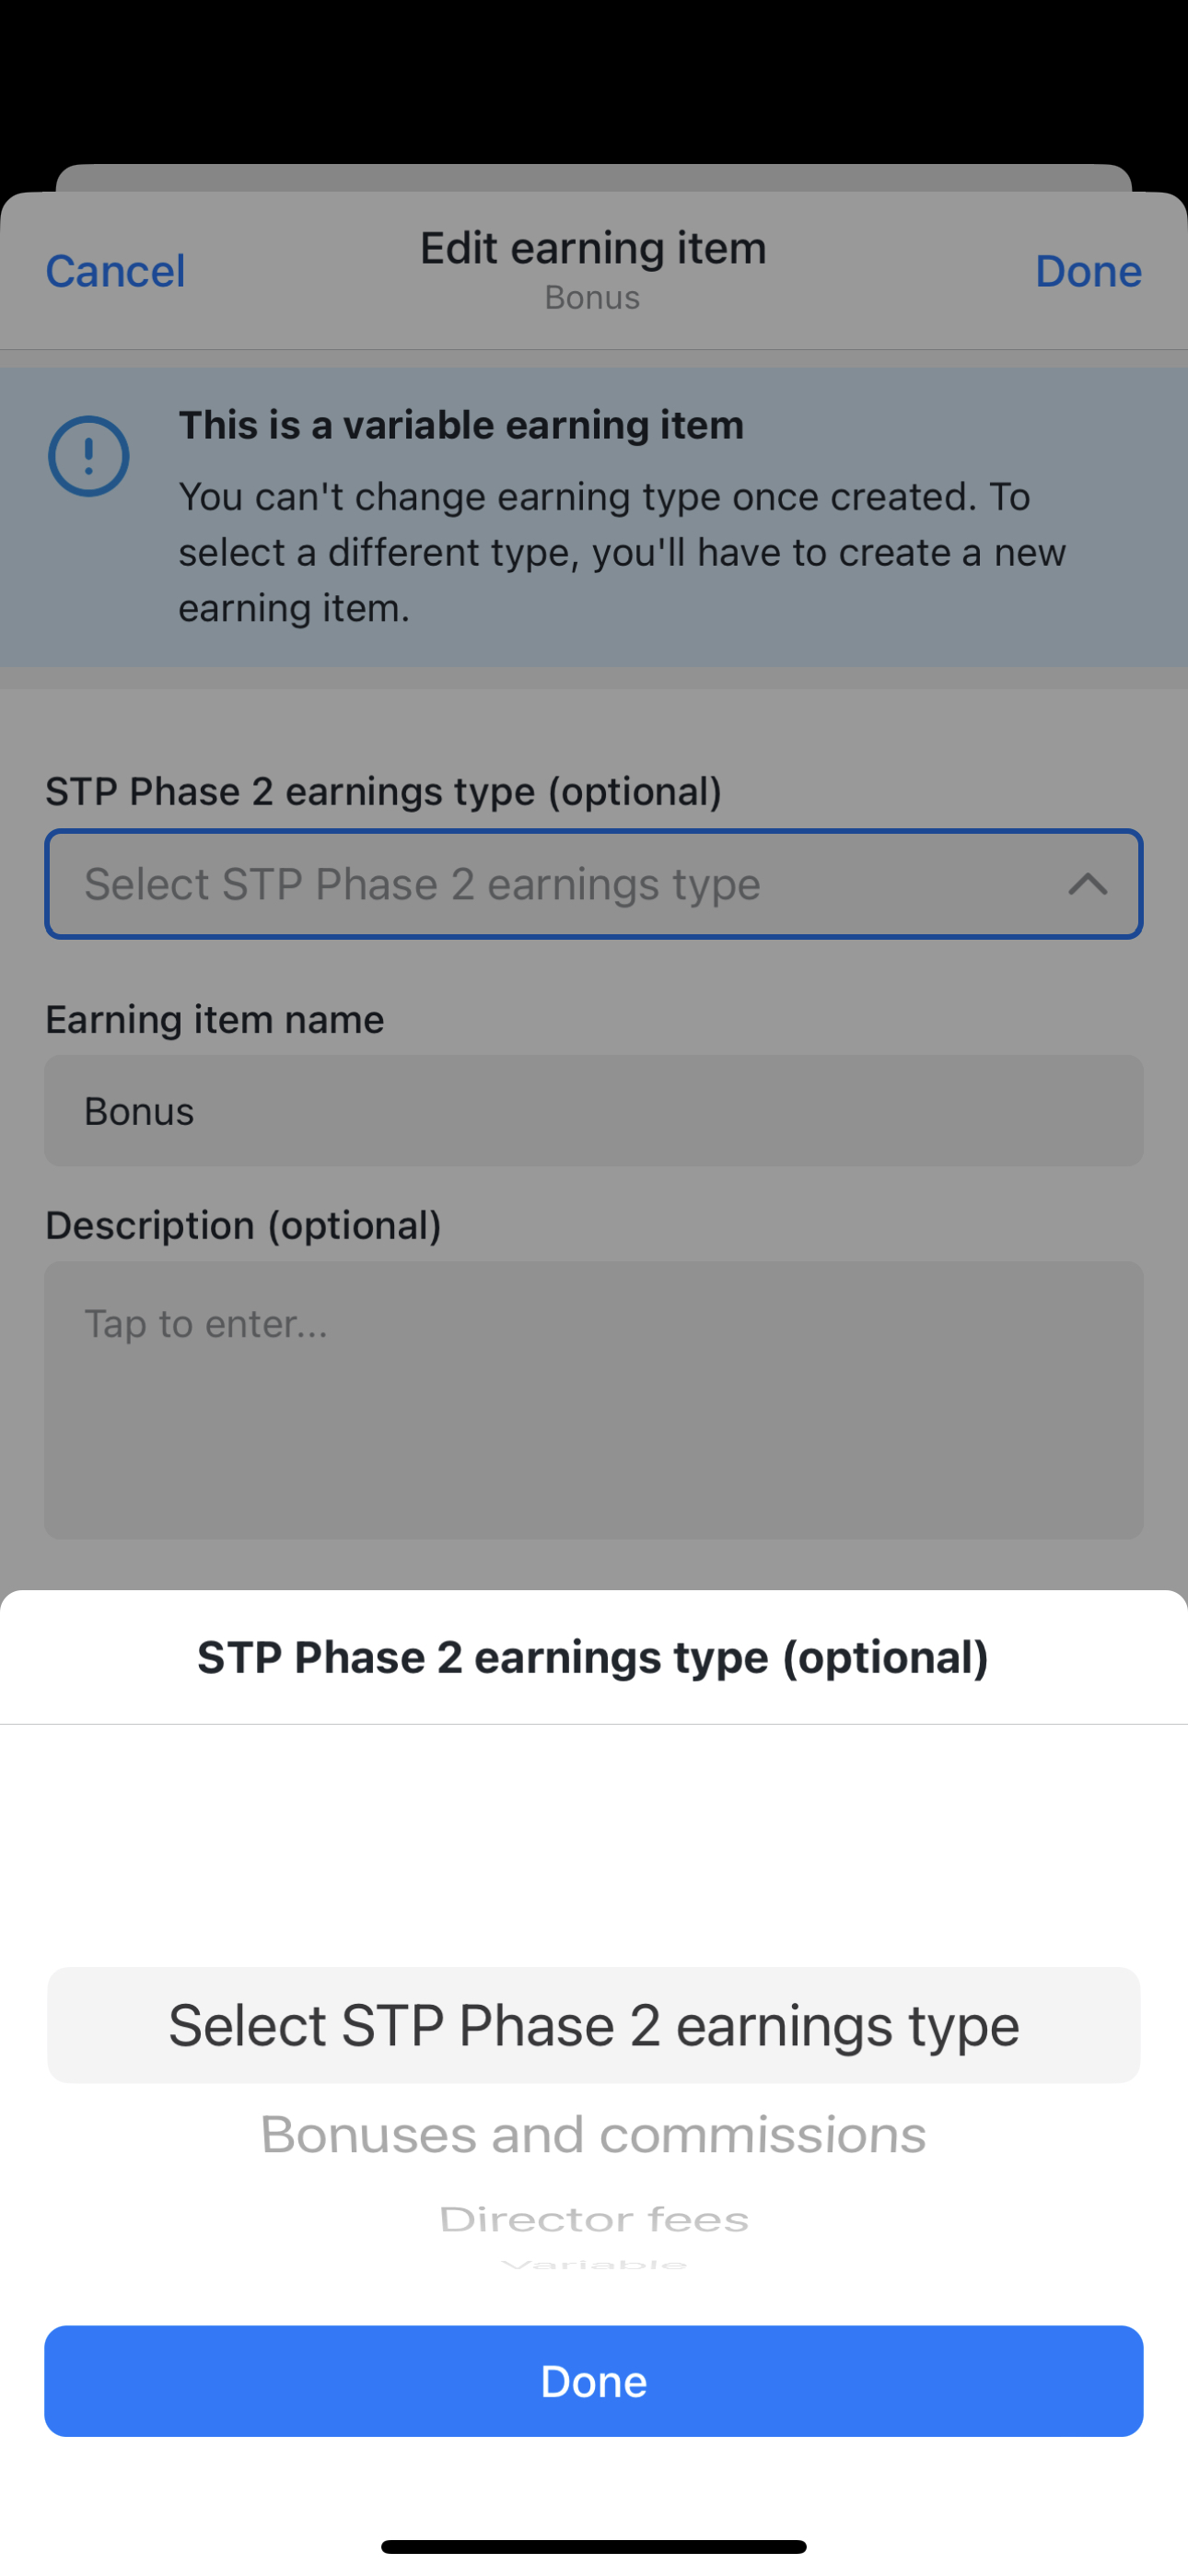 STP Phase 2 earnings type (optional) menu